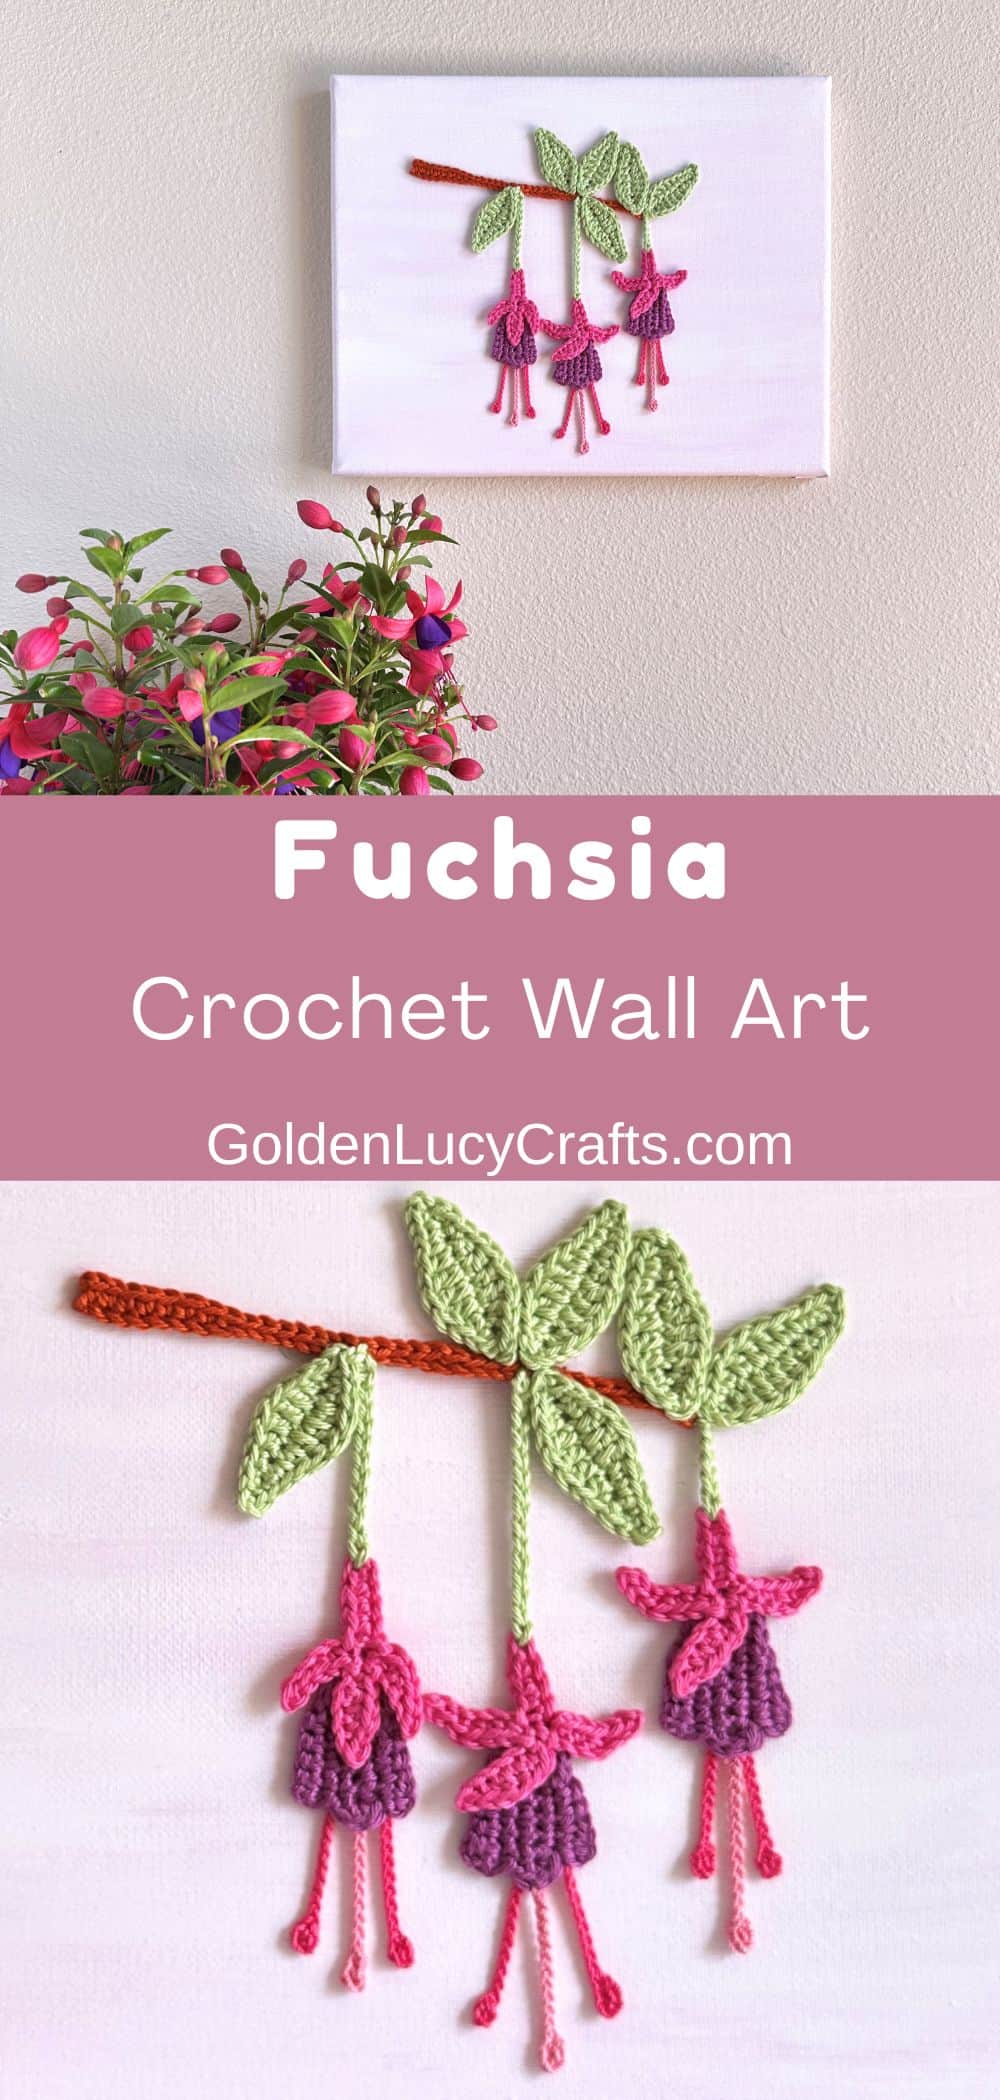 Crochet fuchsia applique on canvas wall decoration.